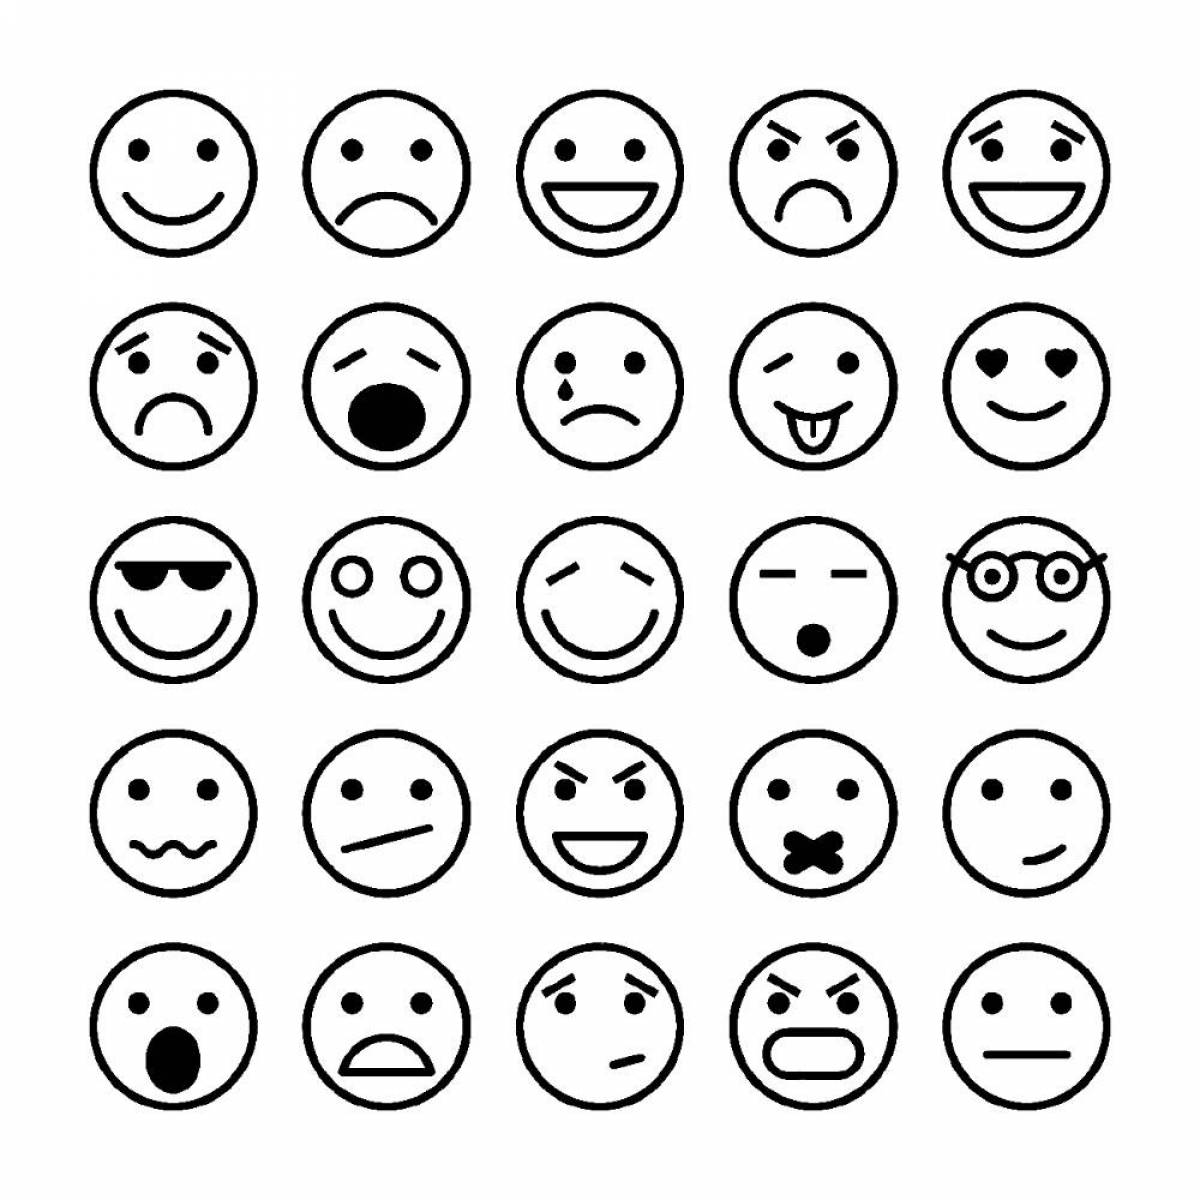 Creative printable emoji coloring page